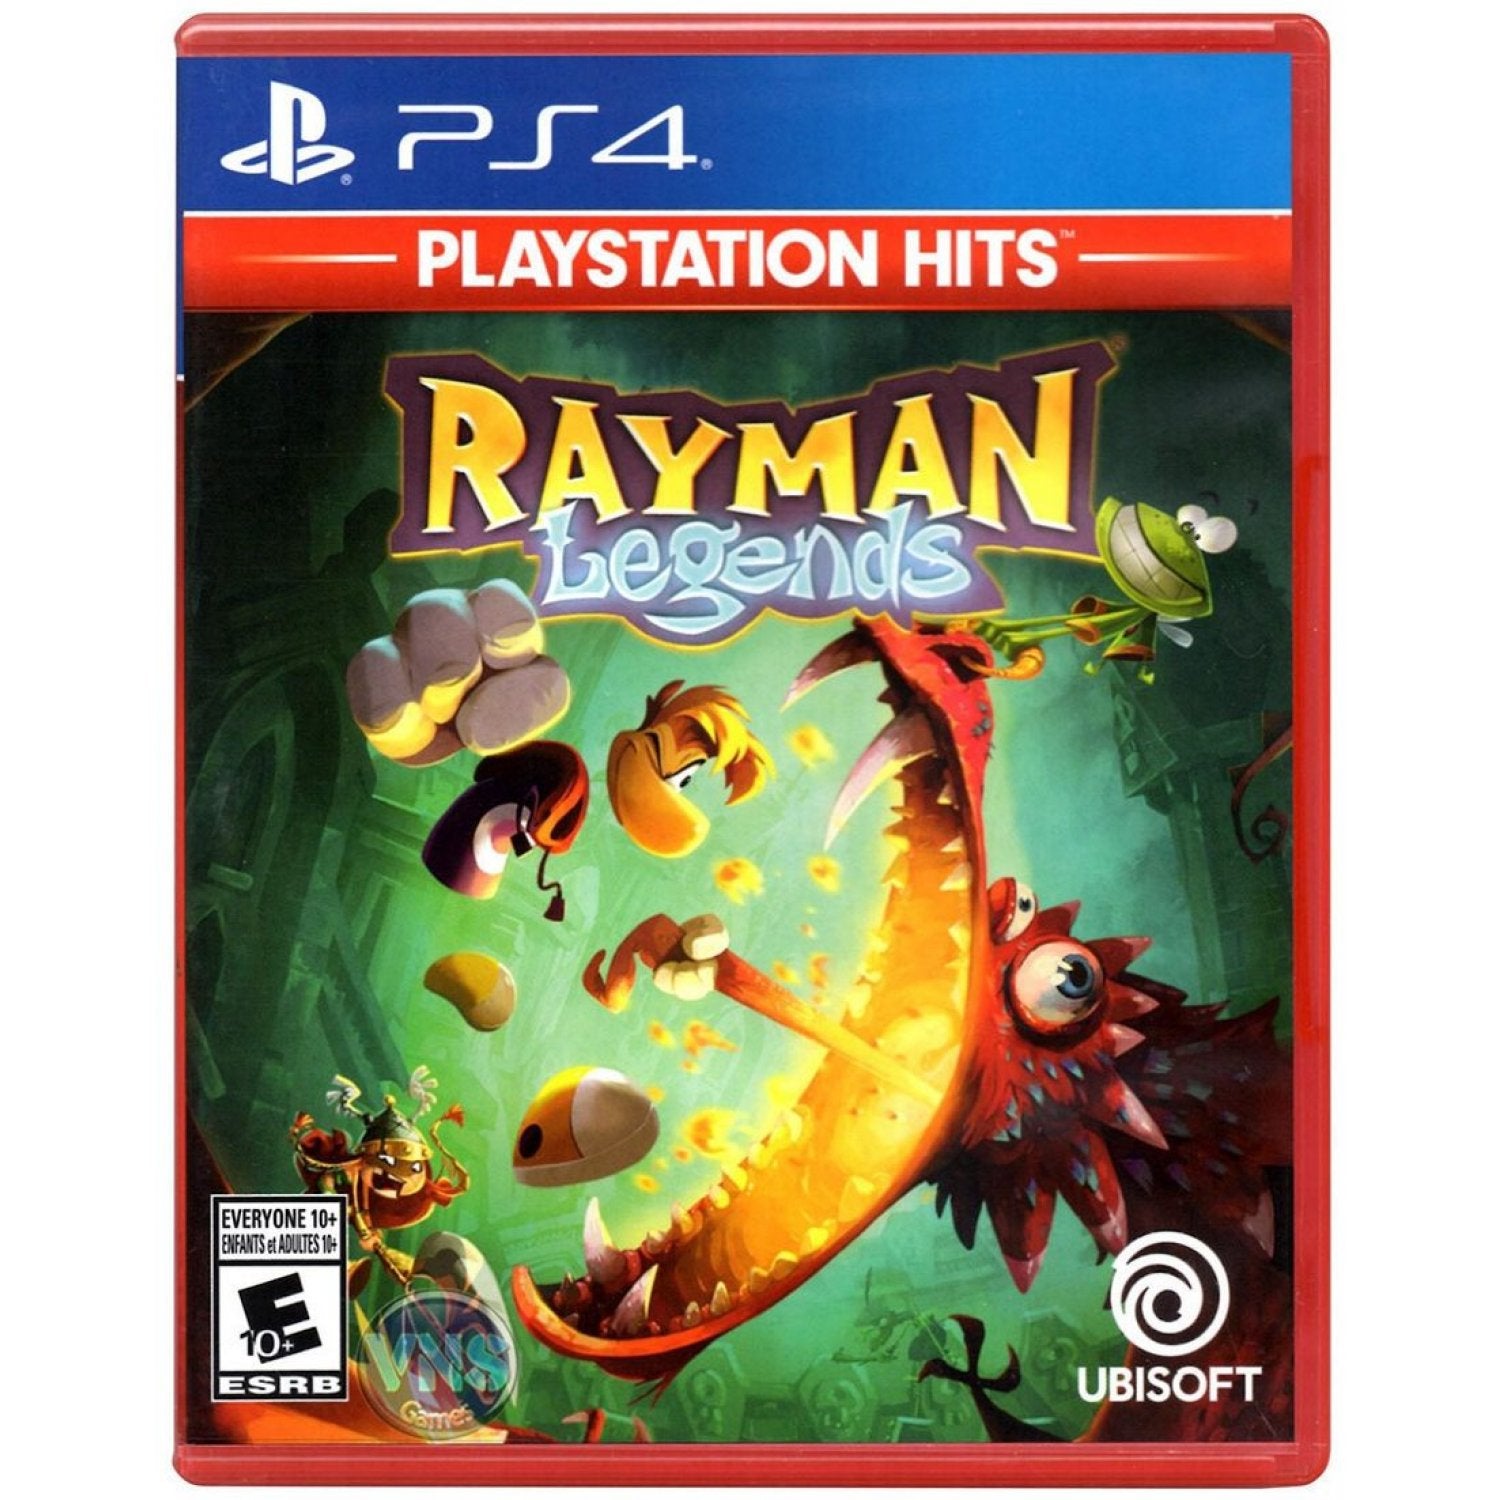 PS4 Rayman Legends (Playstation Hits)